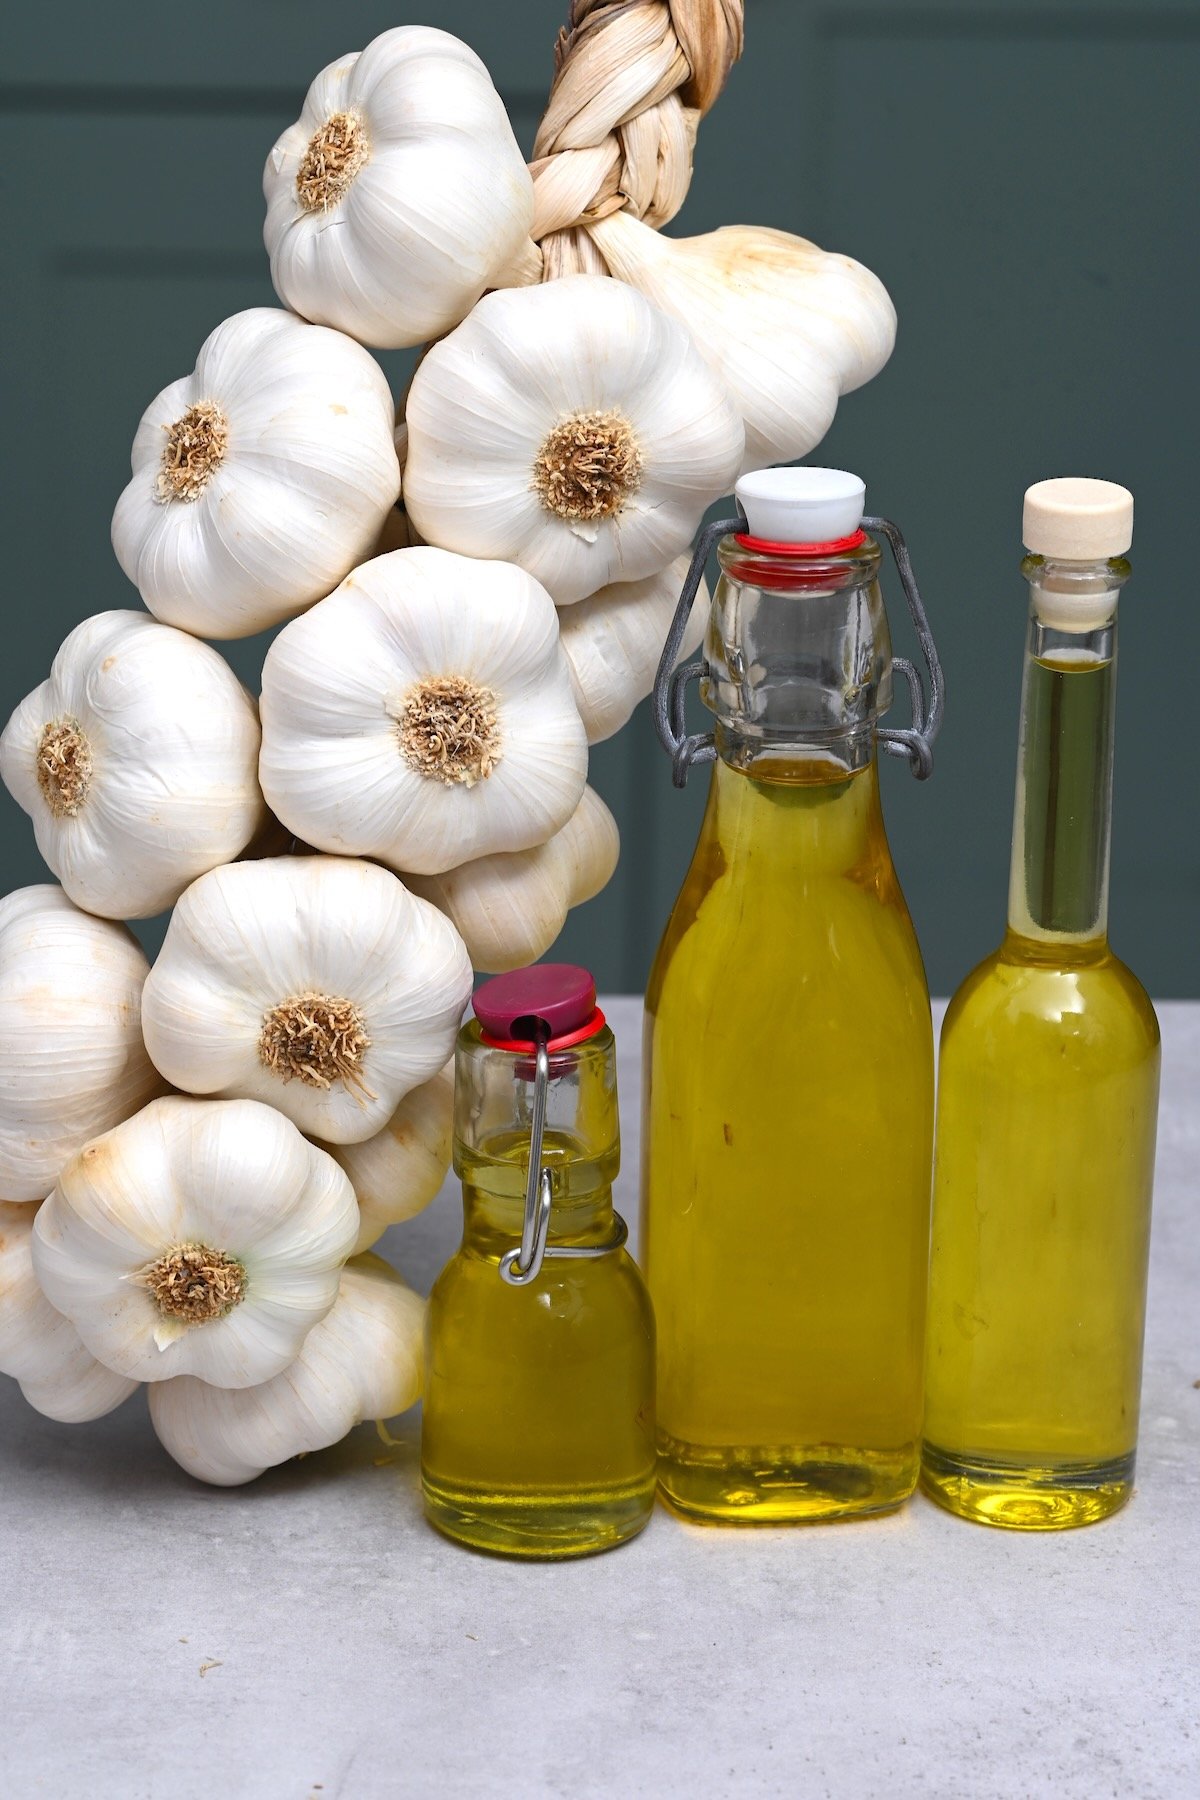 Garlic heads and three bottles with garlic oil